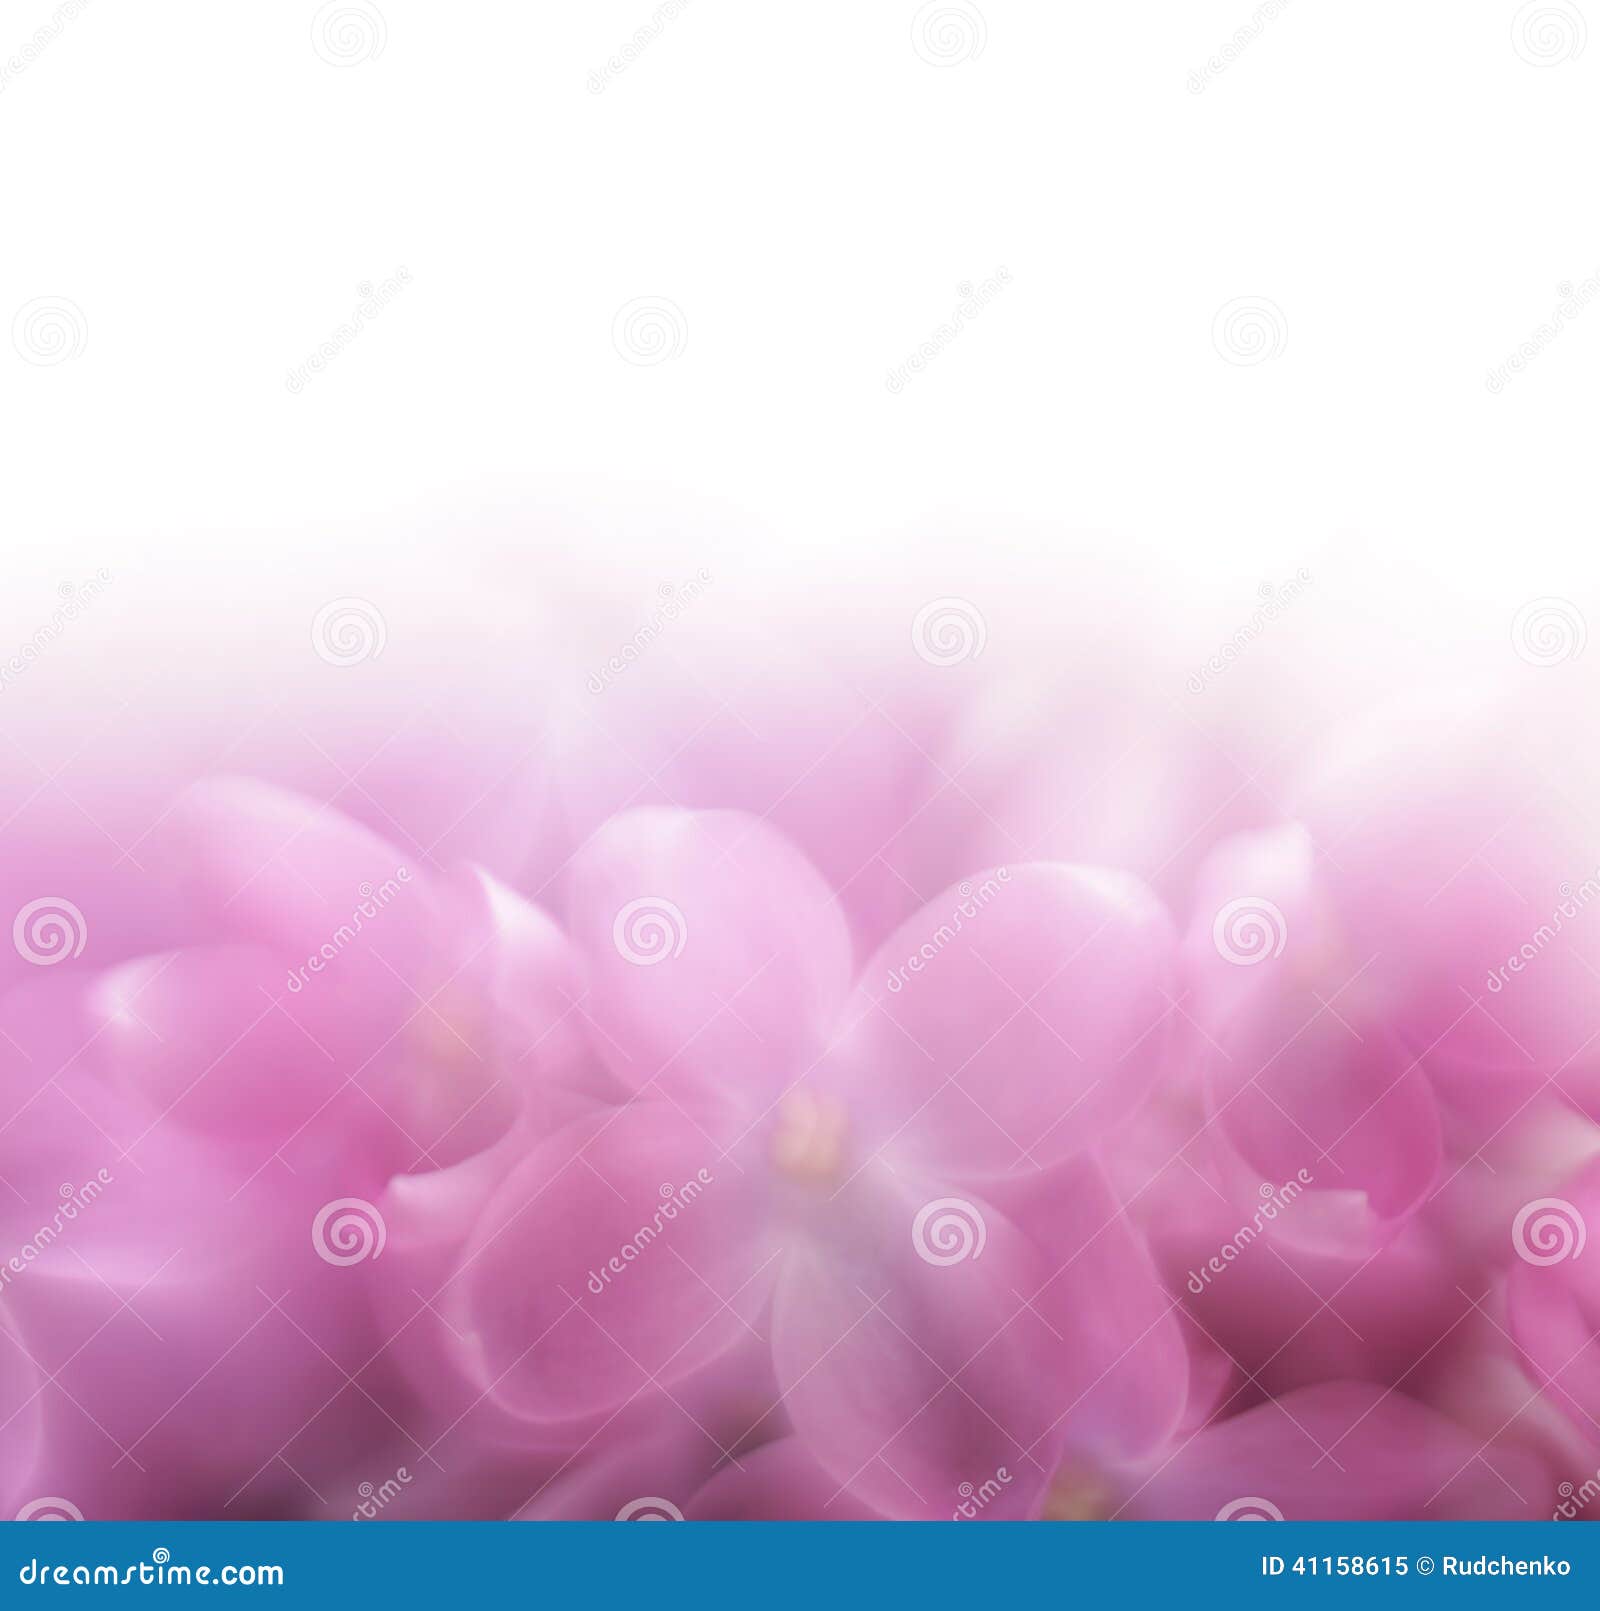 lilac flower background. lensbaby soft focus len